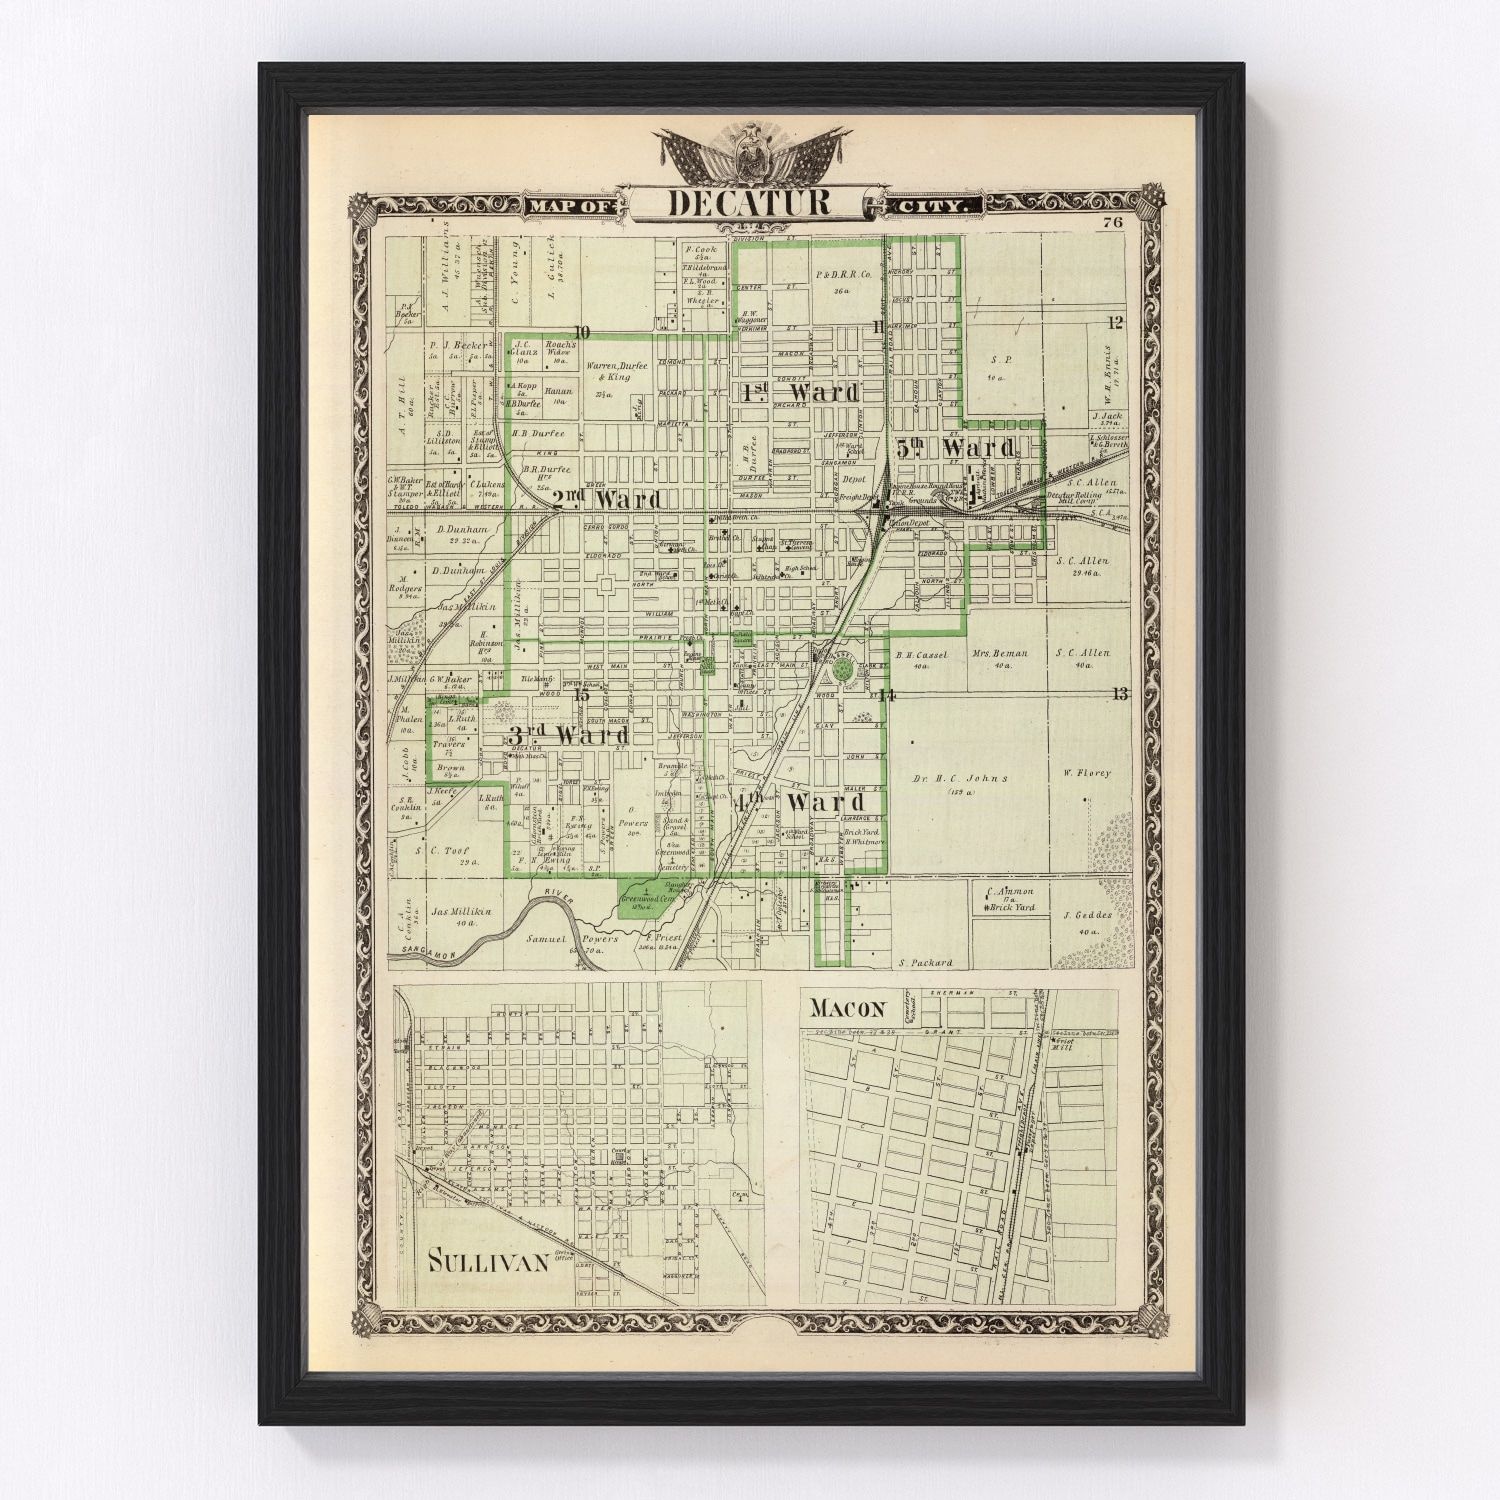 Vintage Map Of Decatur Illinois 1876 By Teds Vintage Art 4059